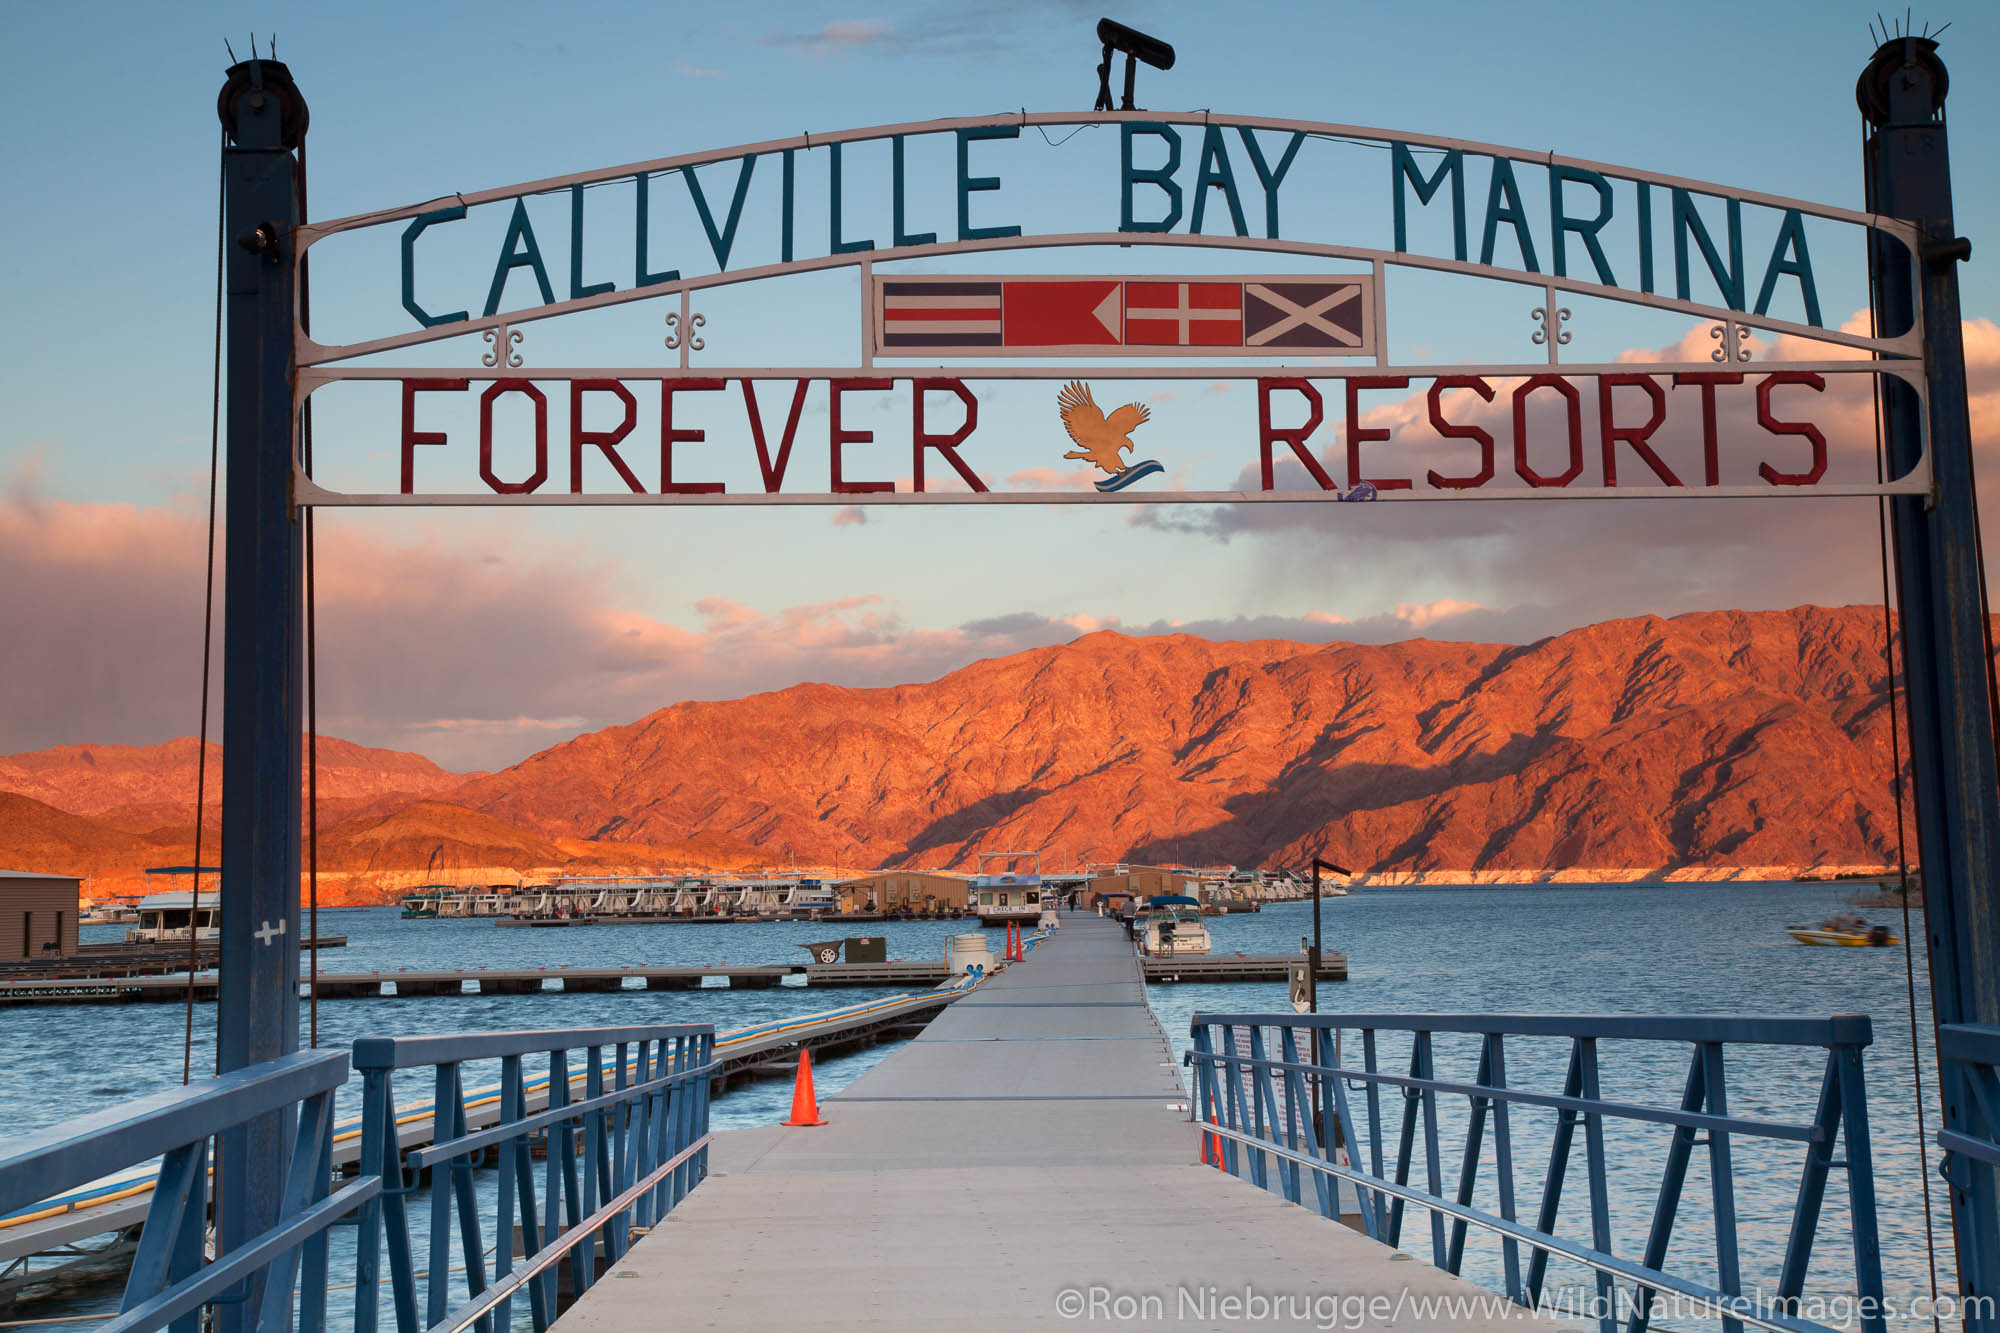 Callville Bay Marina, Lake Mead National Recreation Area, near Las Vegas, Nevada.